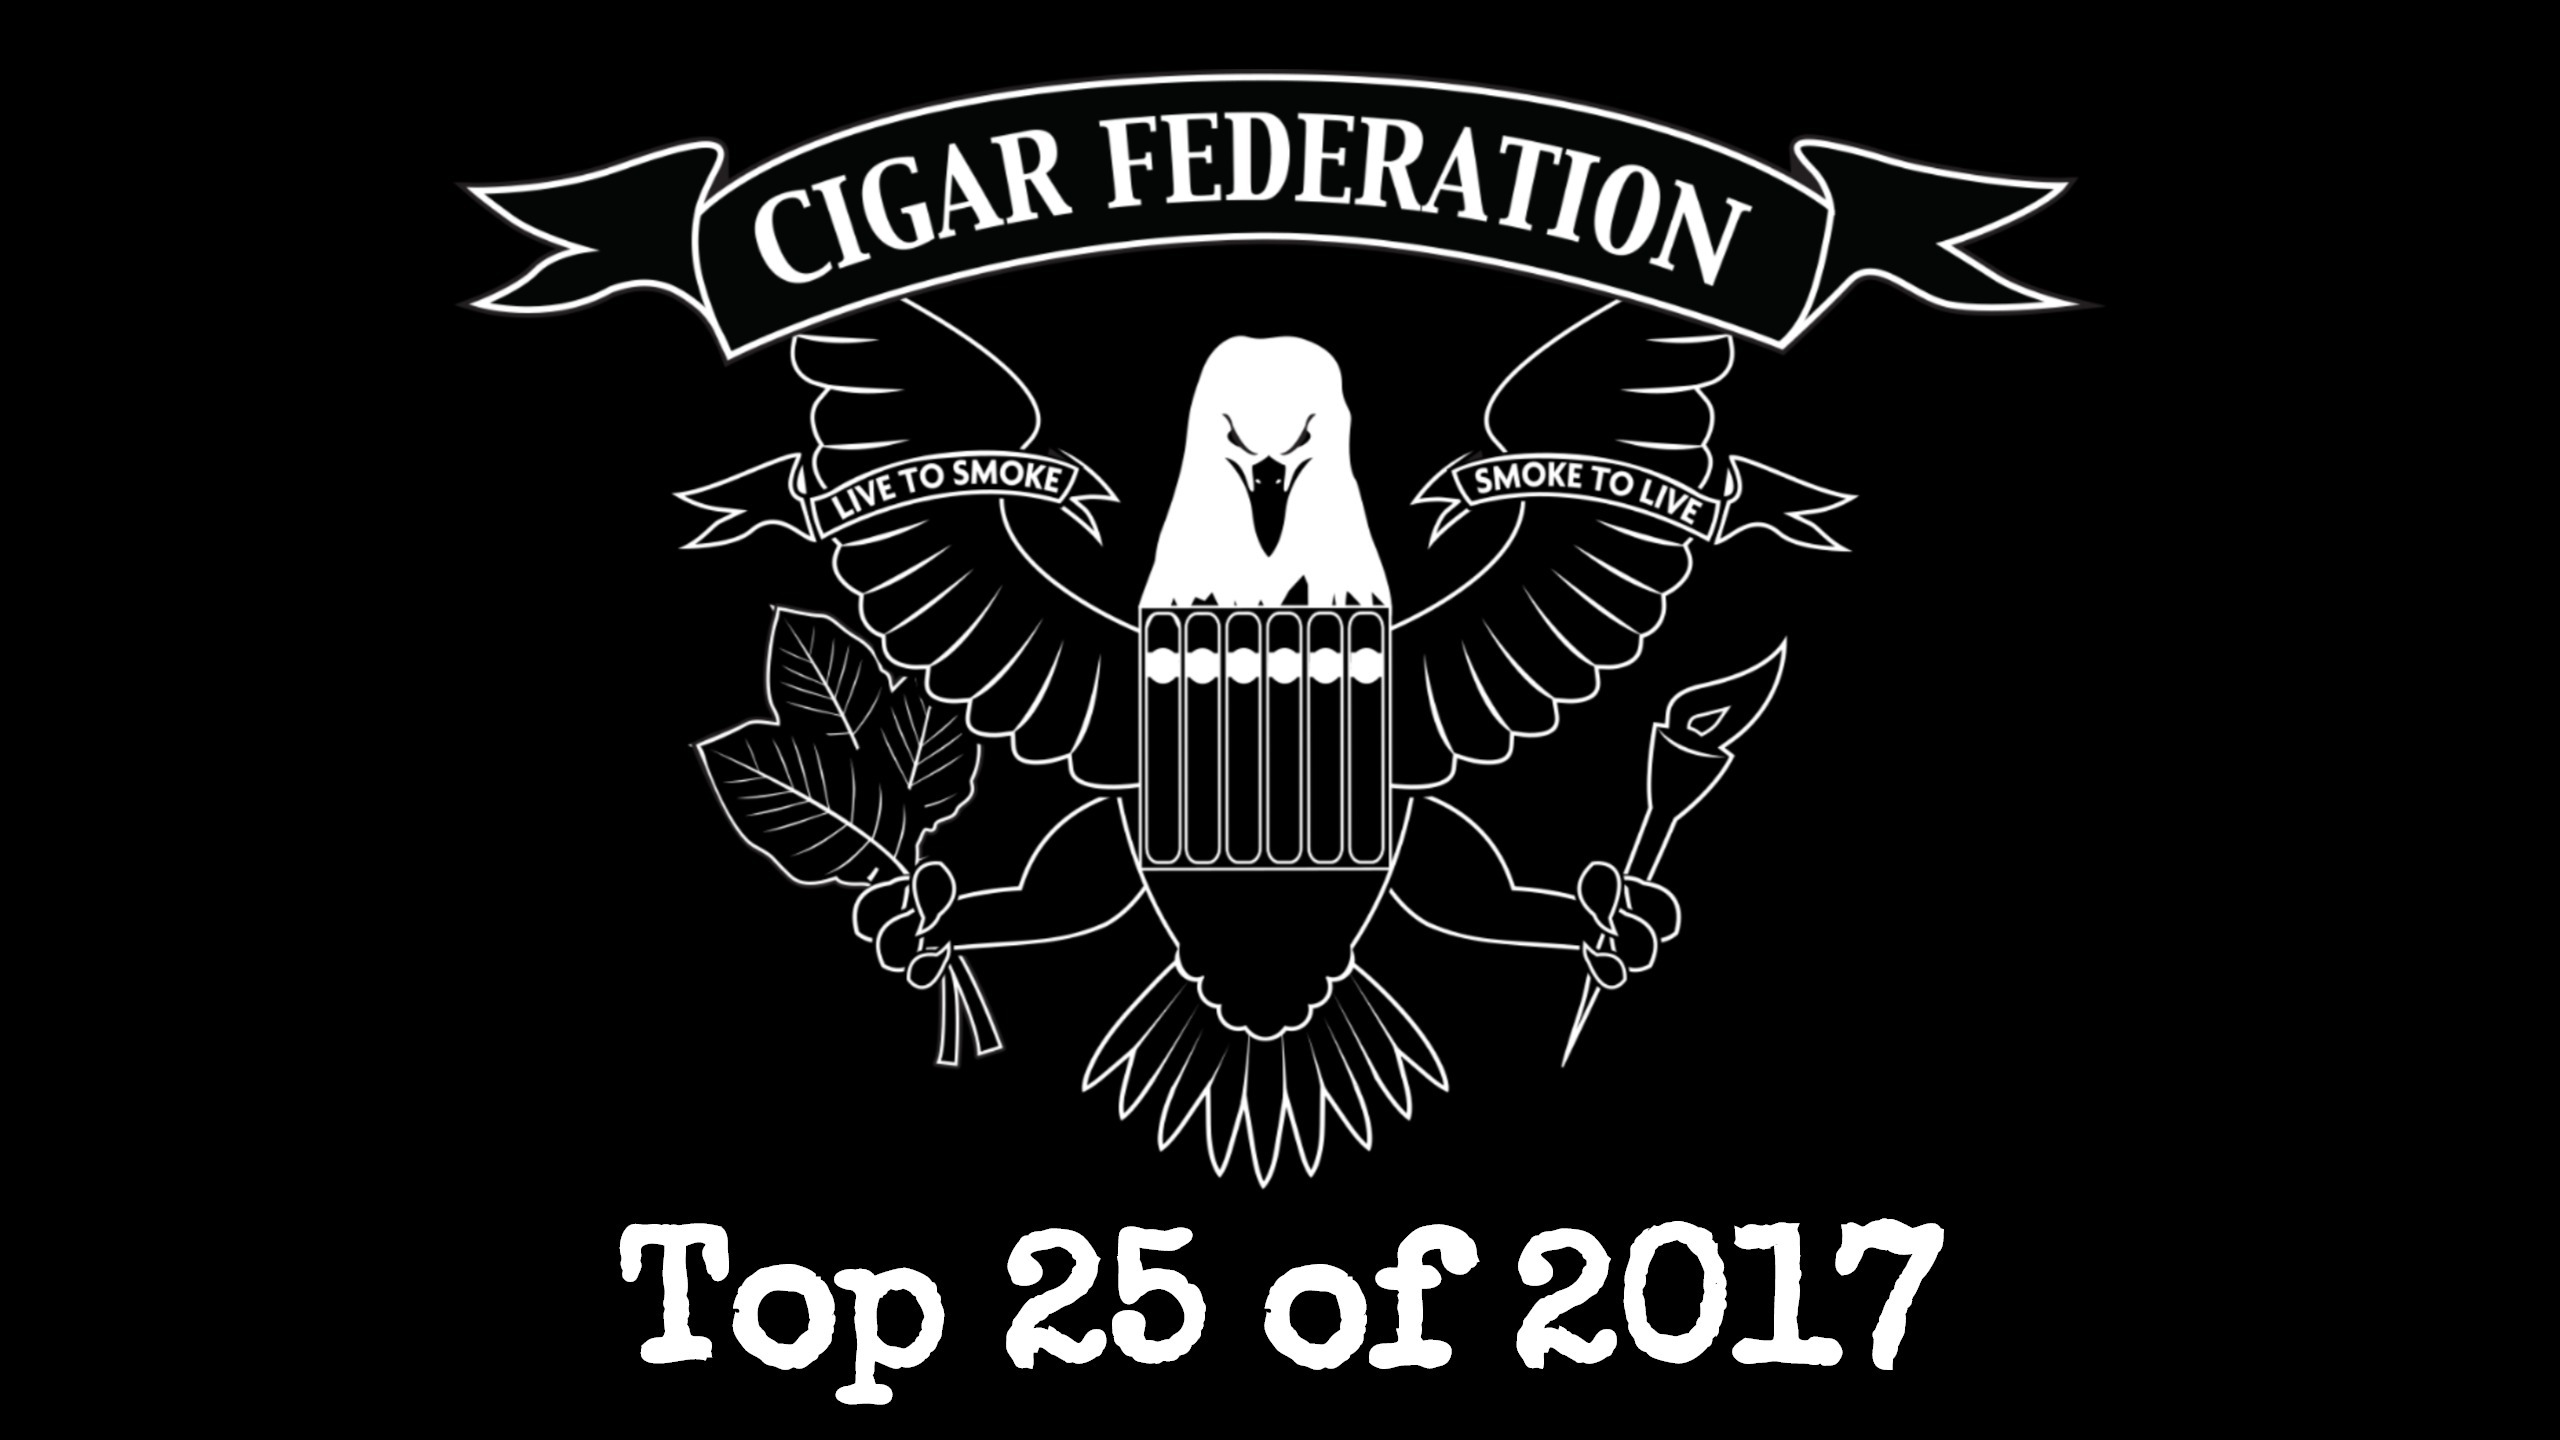 Cigar Chat - Cigar Federation Top 25 of 2017